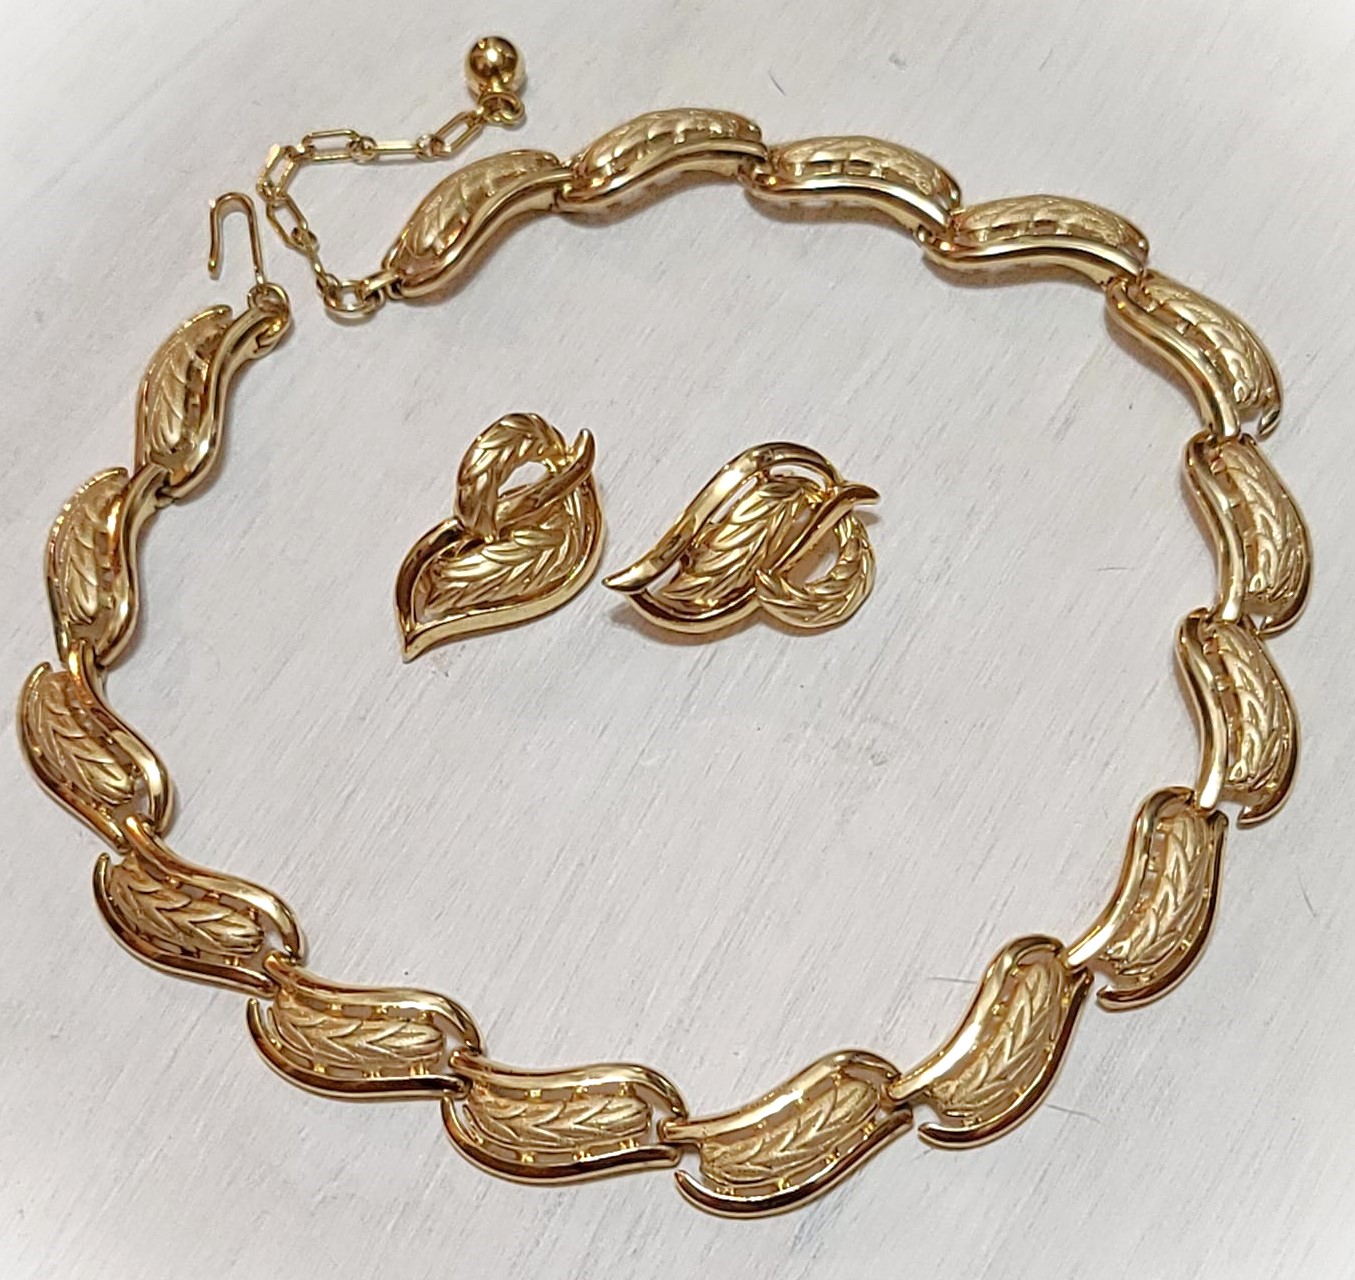 Trifari leaf pattern vintage necklace and earrings set